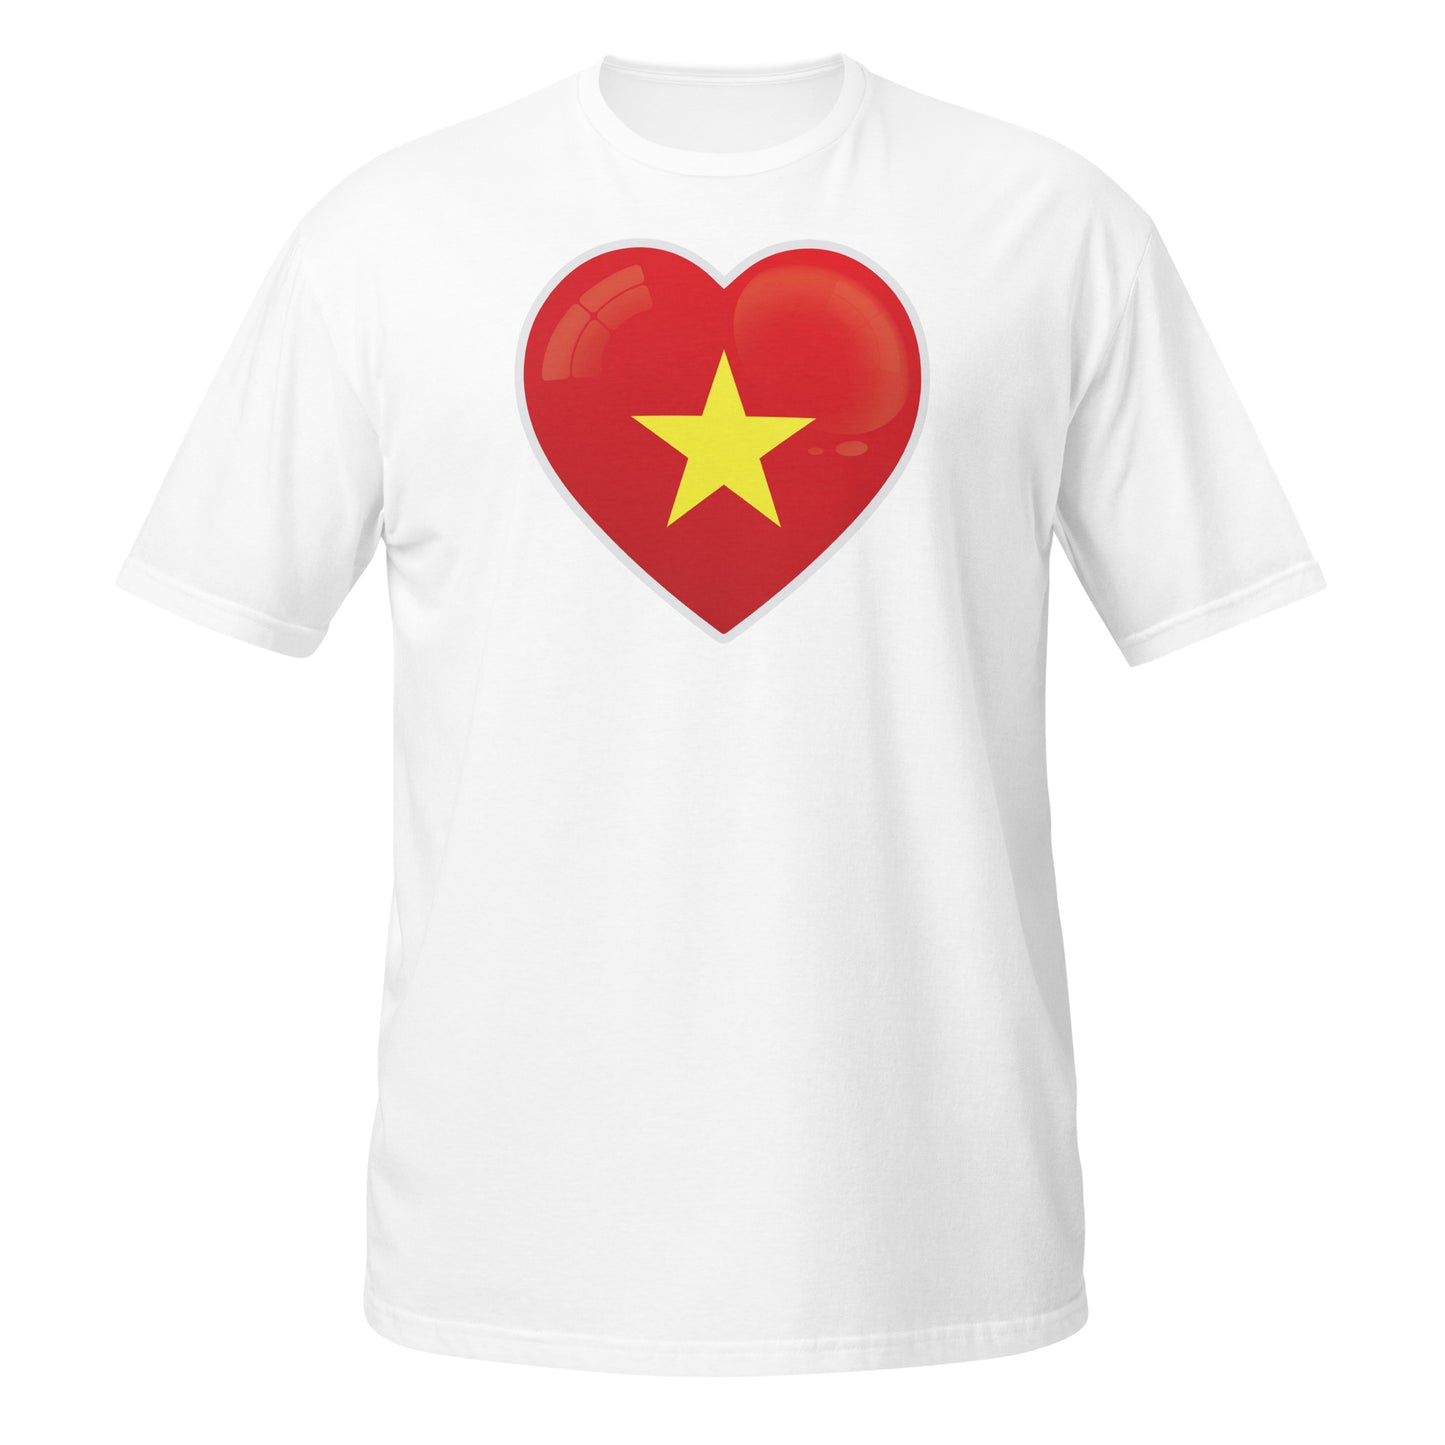 Red Heart T-Shirt with Vietnam design